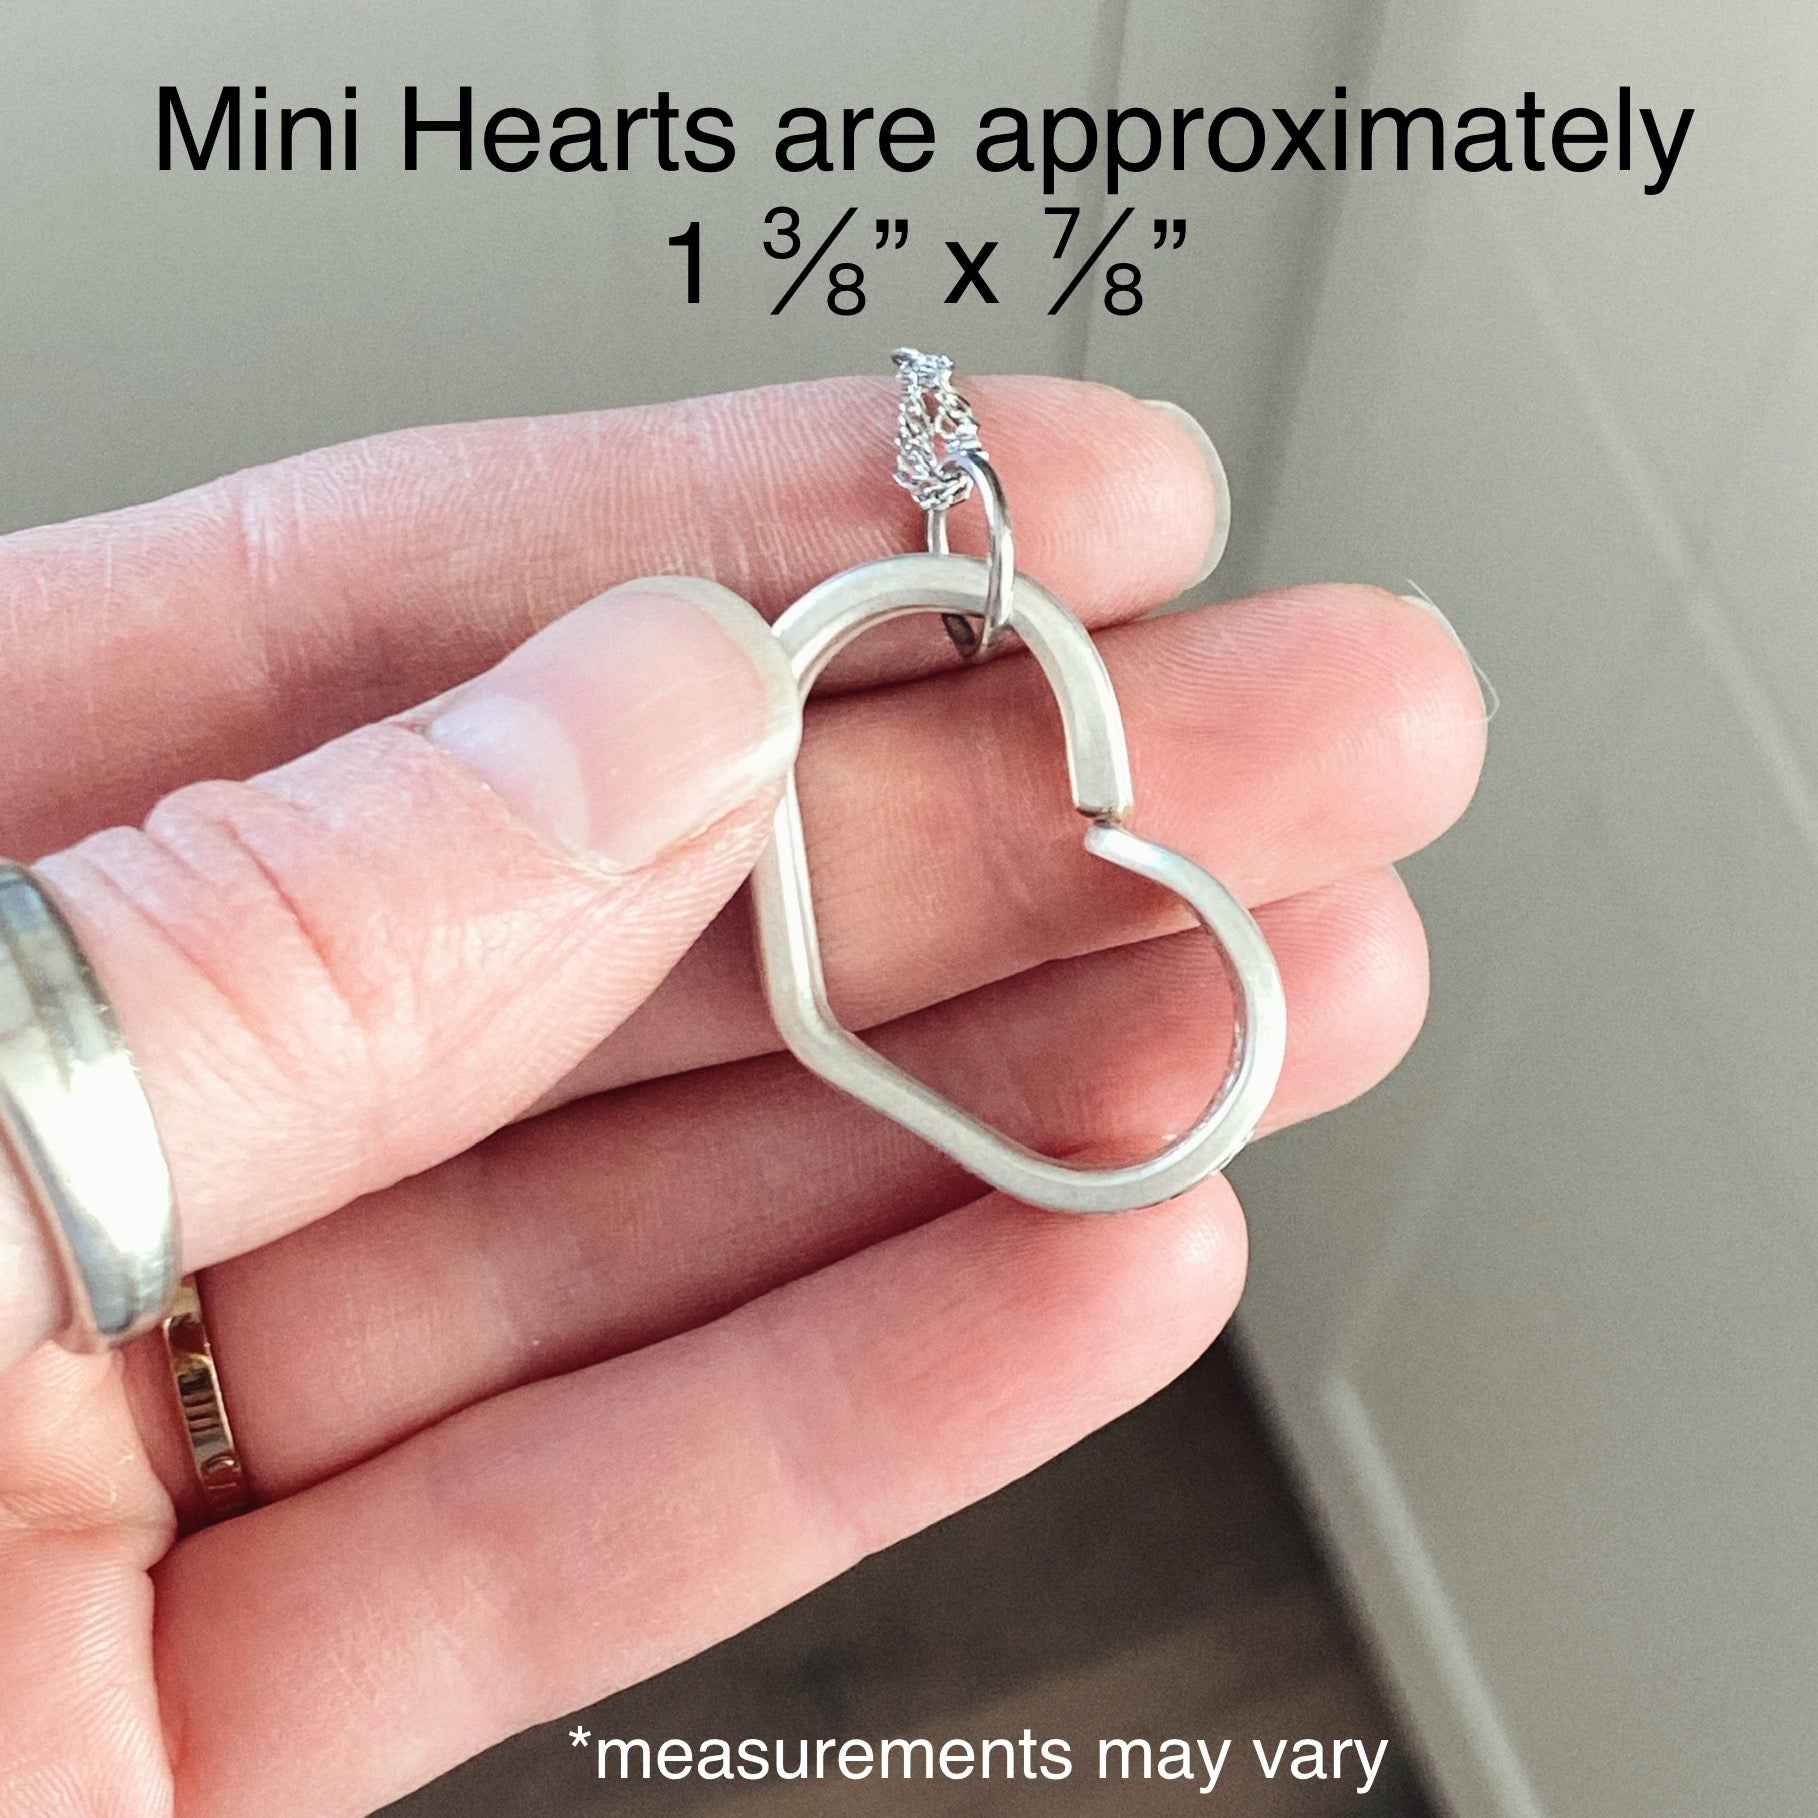 MINI Milady 1940, Mini Floating Heart, Vintage Spoon Jewelry Hearts callistafaye   